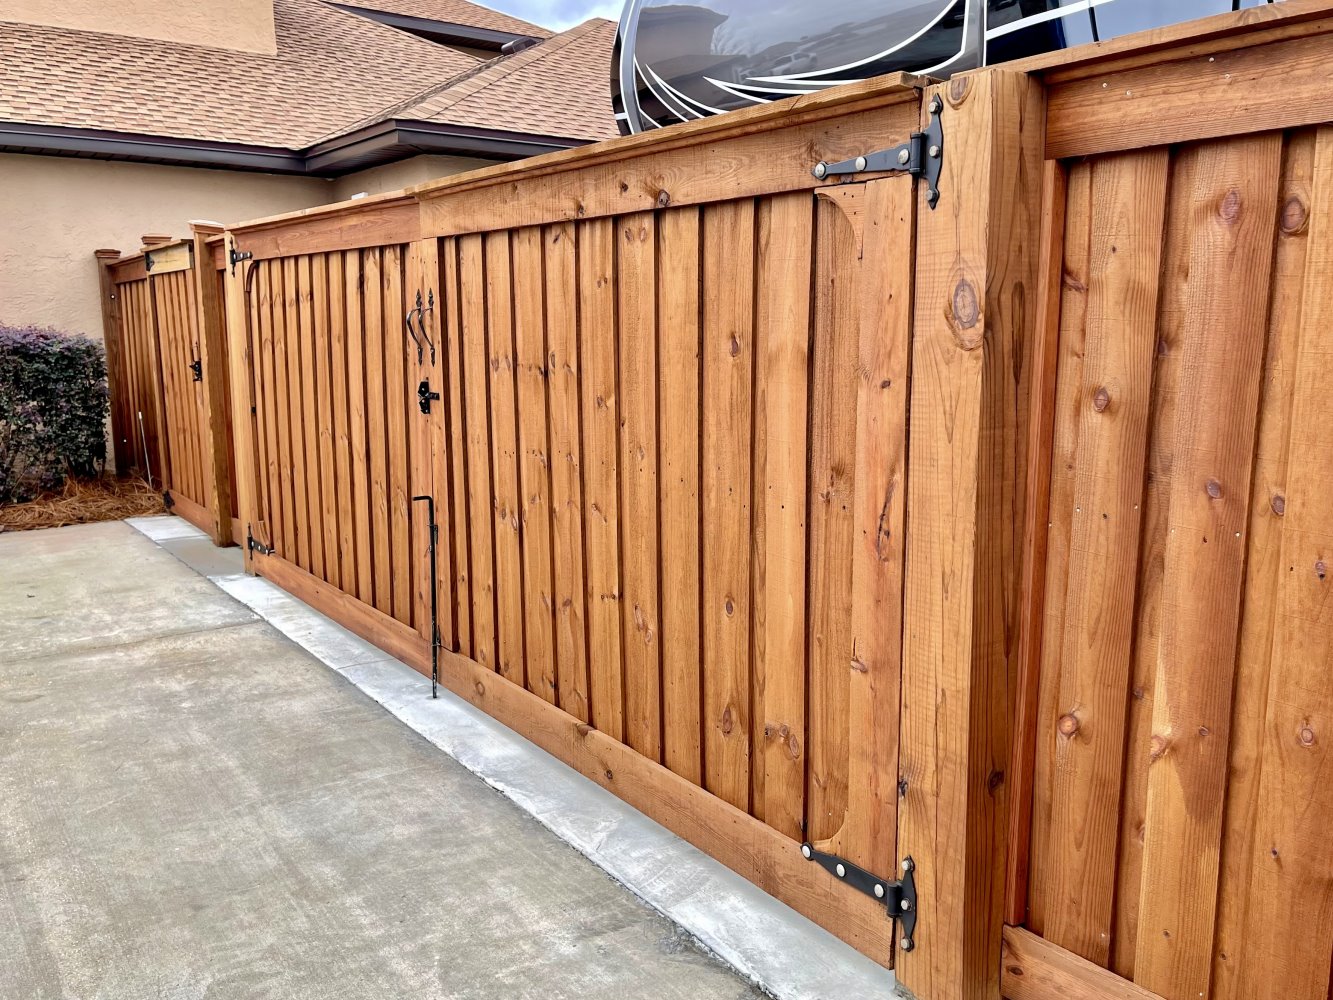 Elkton FL cap and trim style wood fence